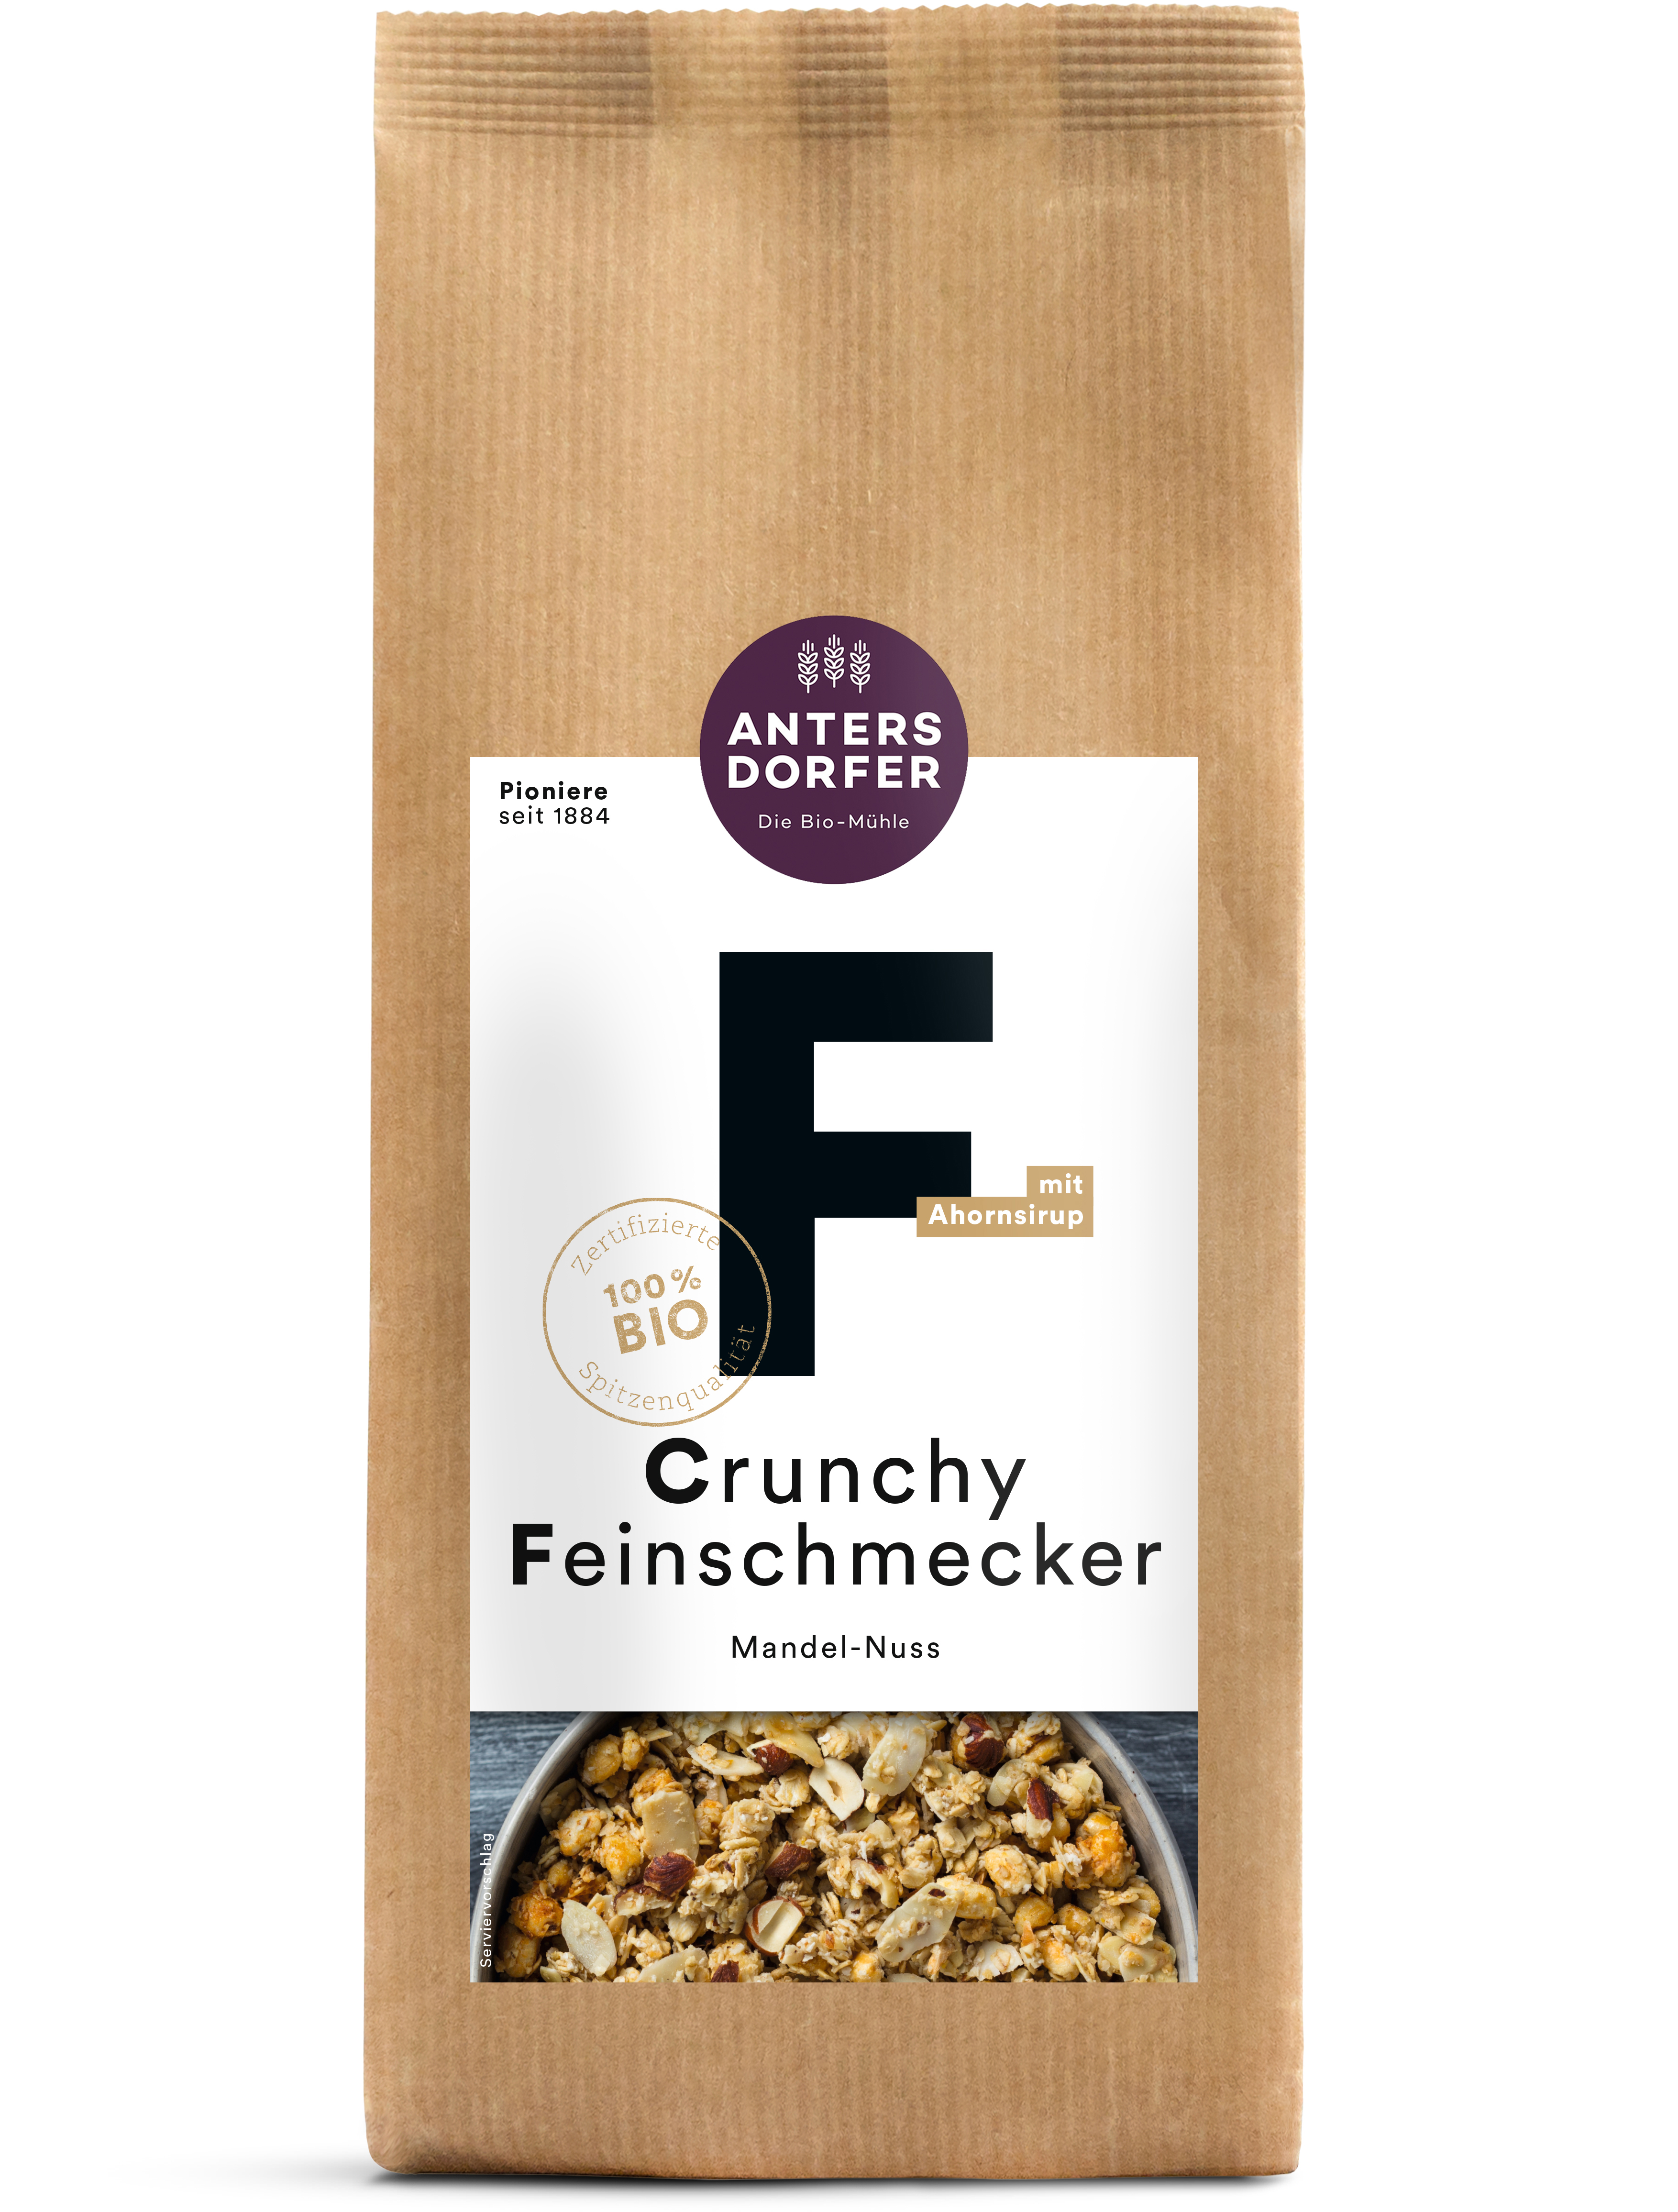 Crunchy Feinschmecker mit Mandel-Nuss